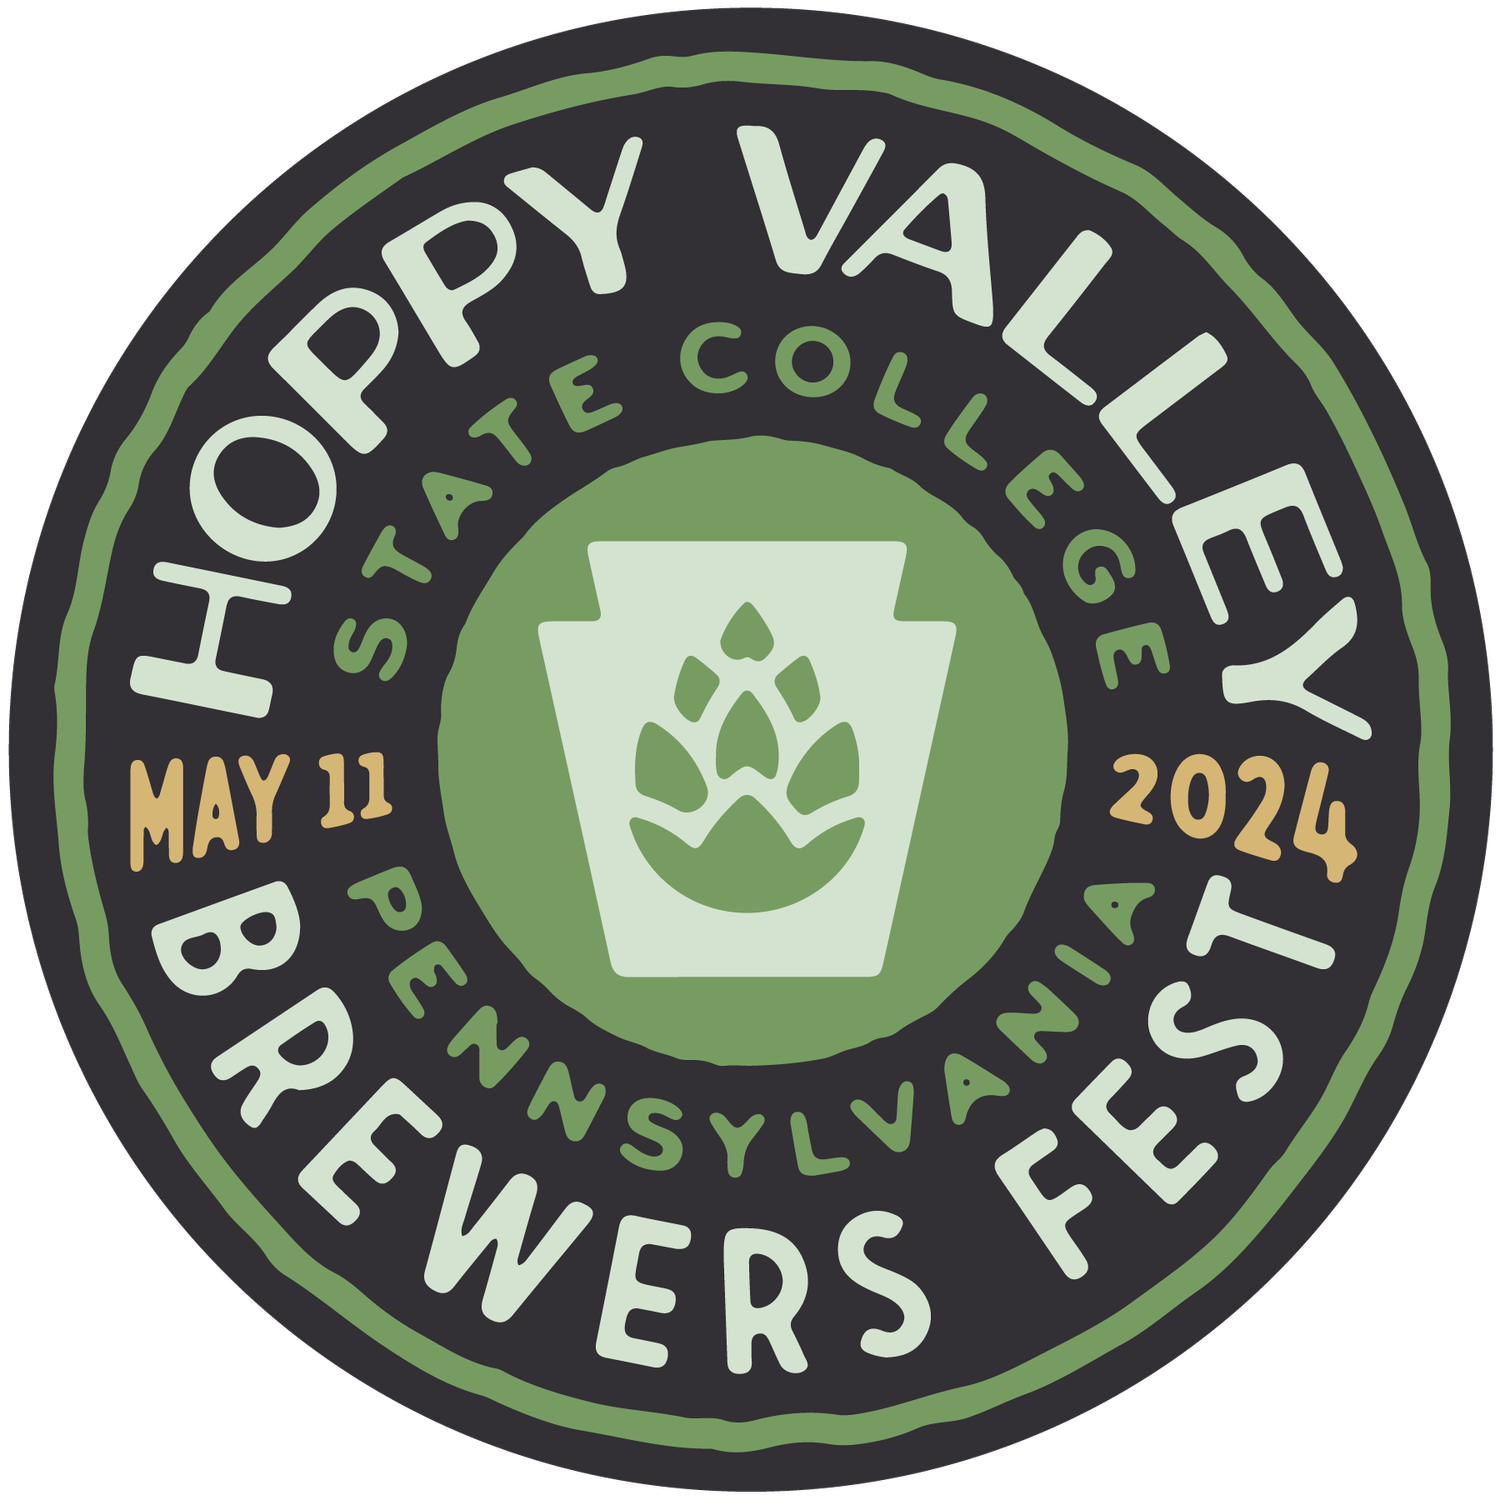 Hoppy Valley Brewers Fest @ Beaver Stadium